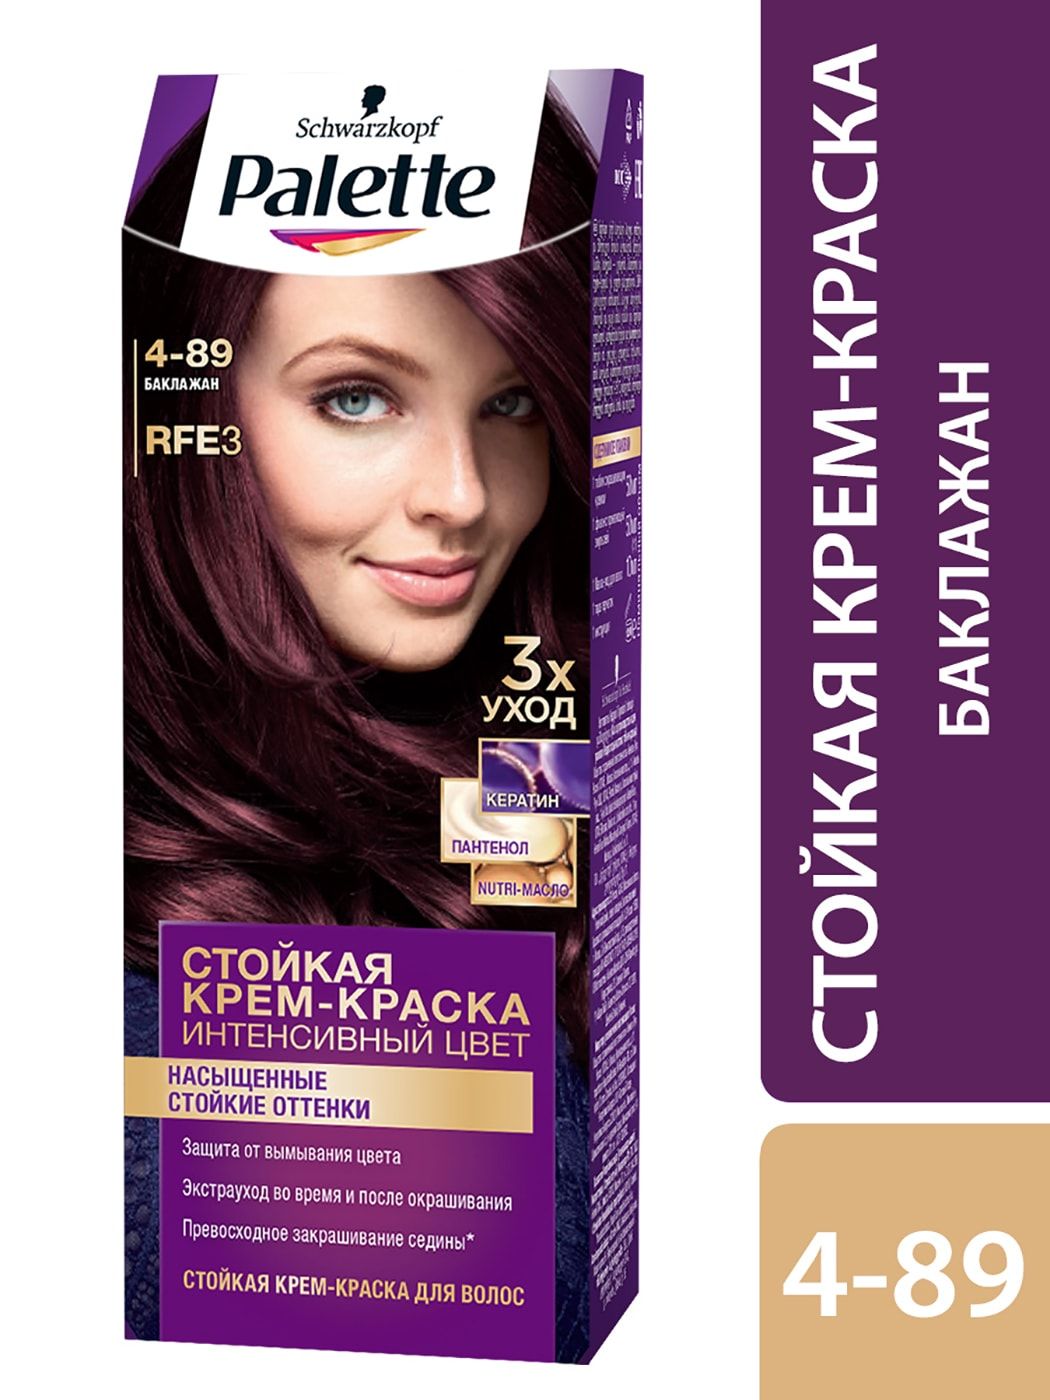 Краска для волос, Palette, rfe3, баклажан